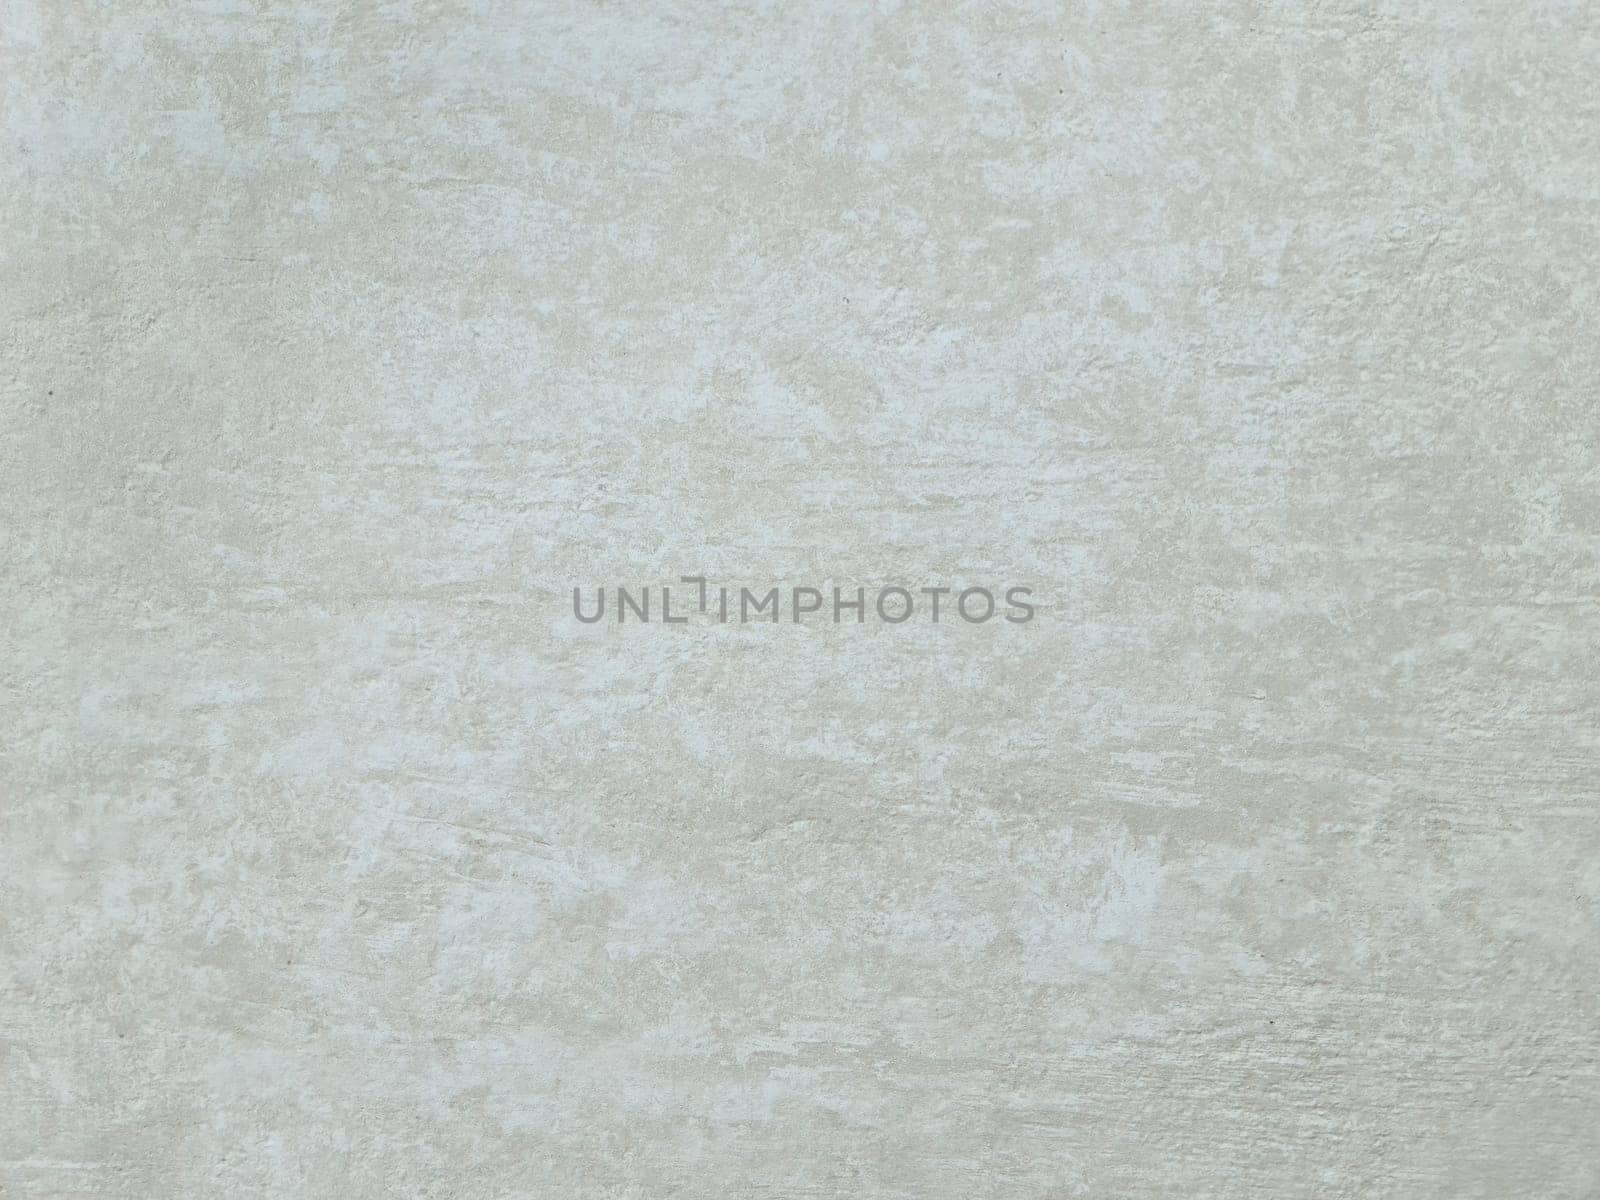 Background of gray decorative heterogeneous plaster with streaks.